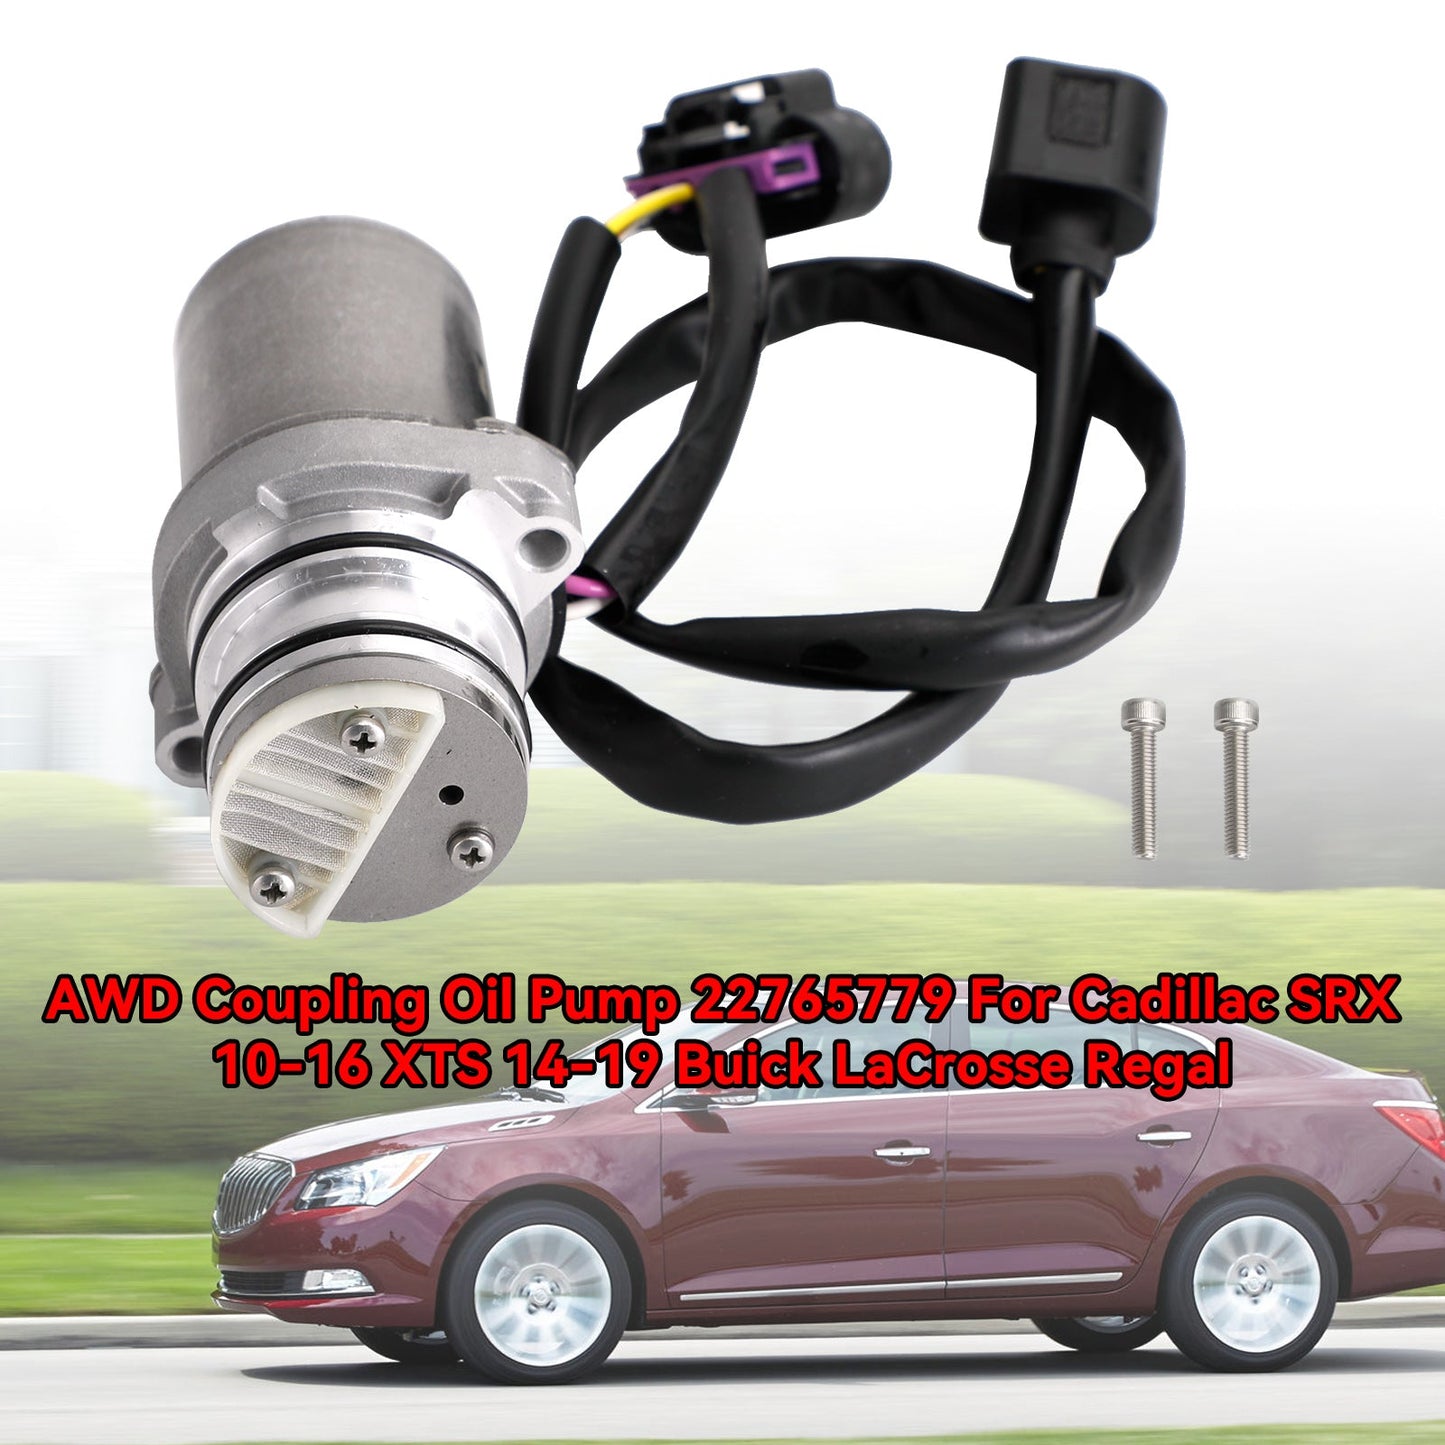 2010-2011 Cadillac SRX V6 2.8L 3.0L AWD Coupling Oil Pump 22765779 404029 13285796 699000